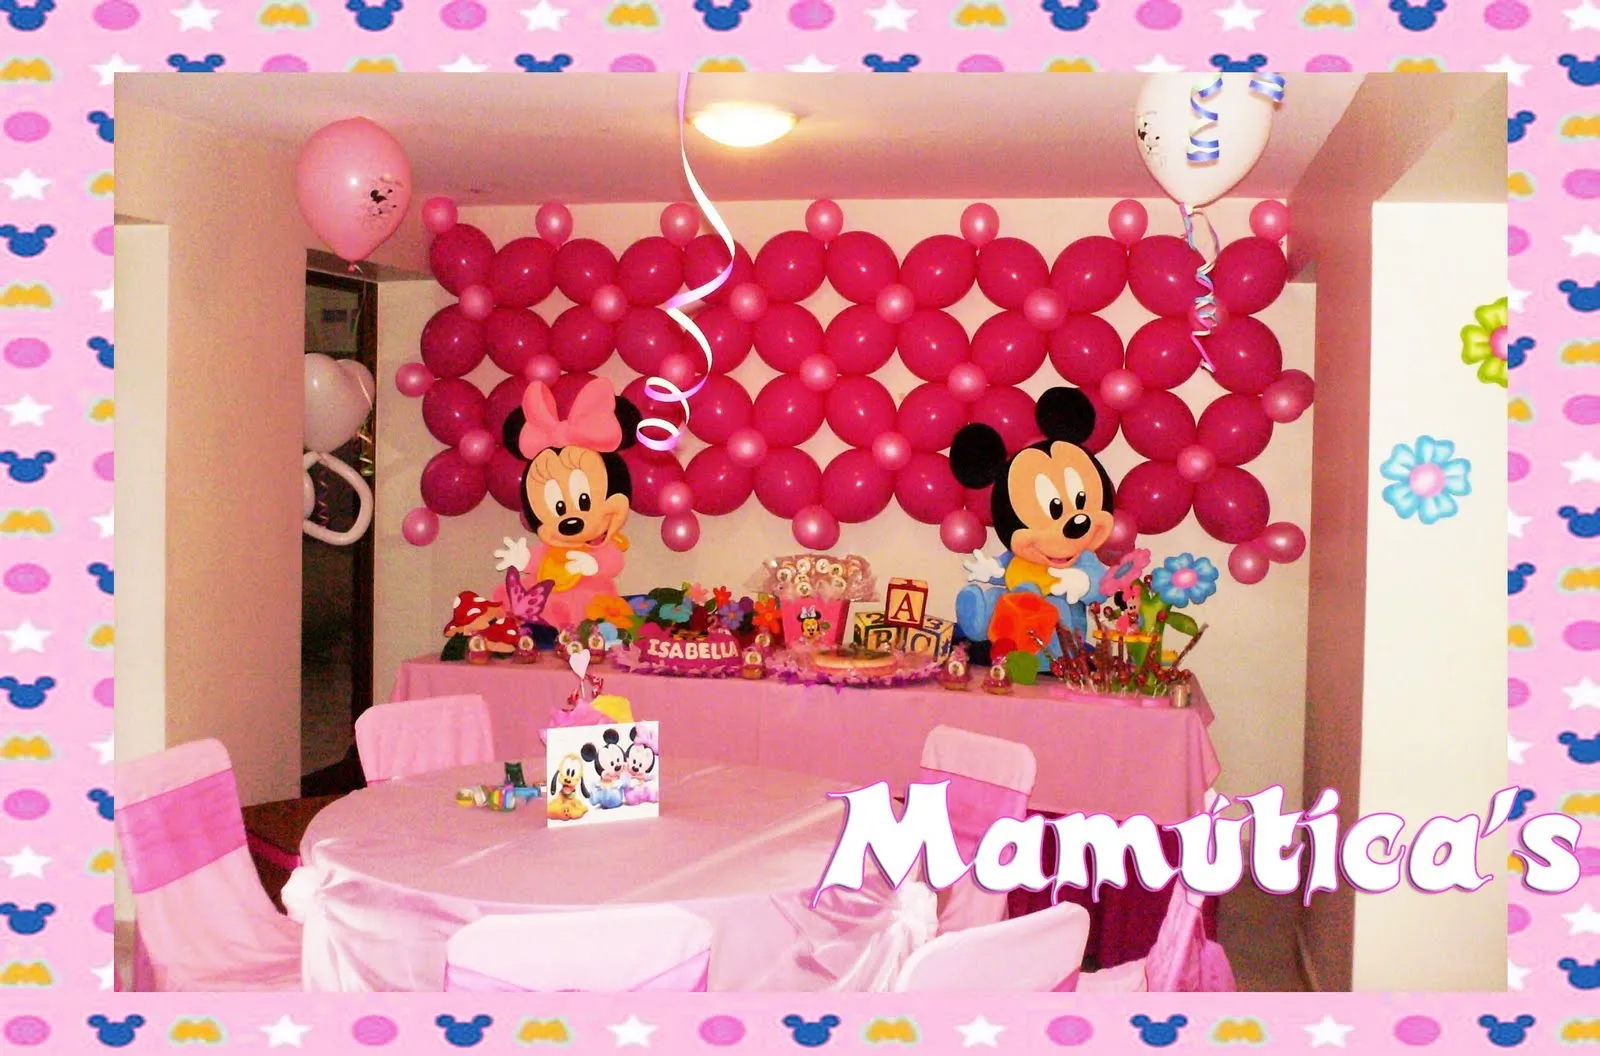 Mamutica's: Baby Minnie